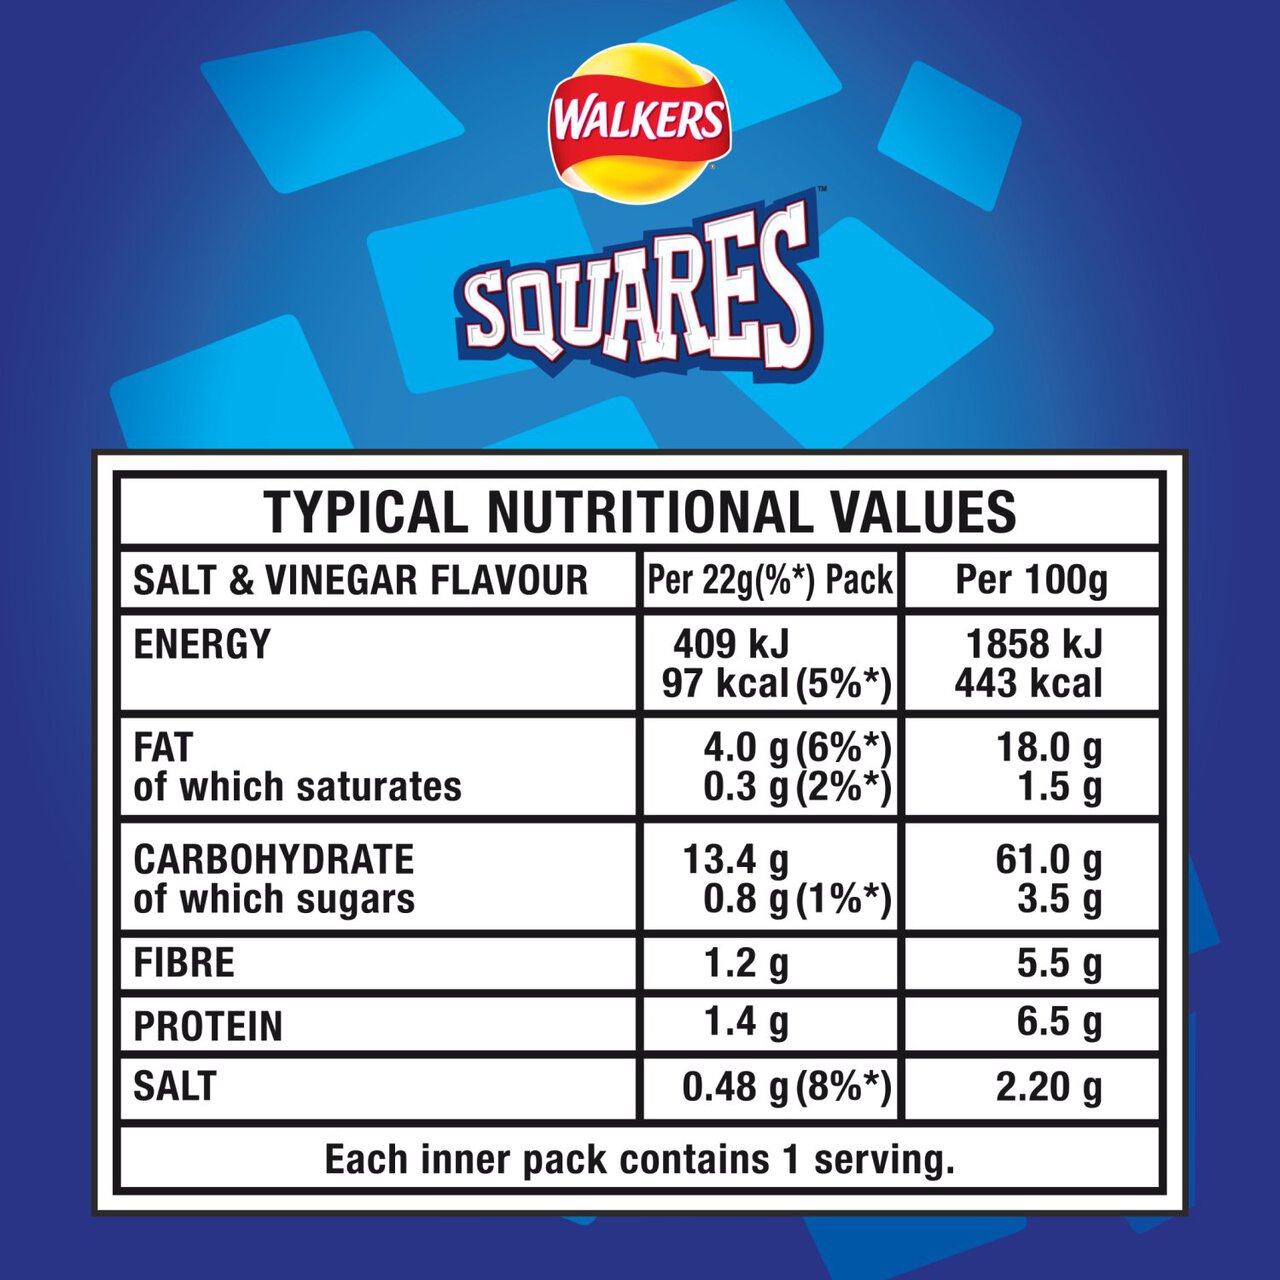 Walkers Squares Salt & Vinegar Multipack Snacks 6 per pack